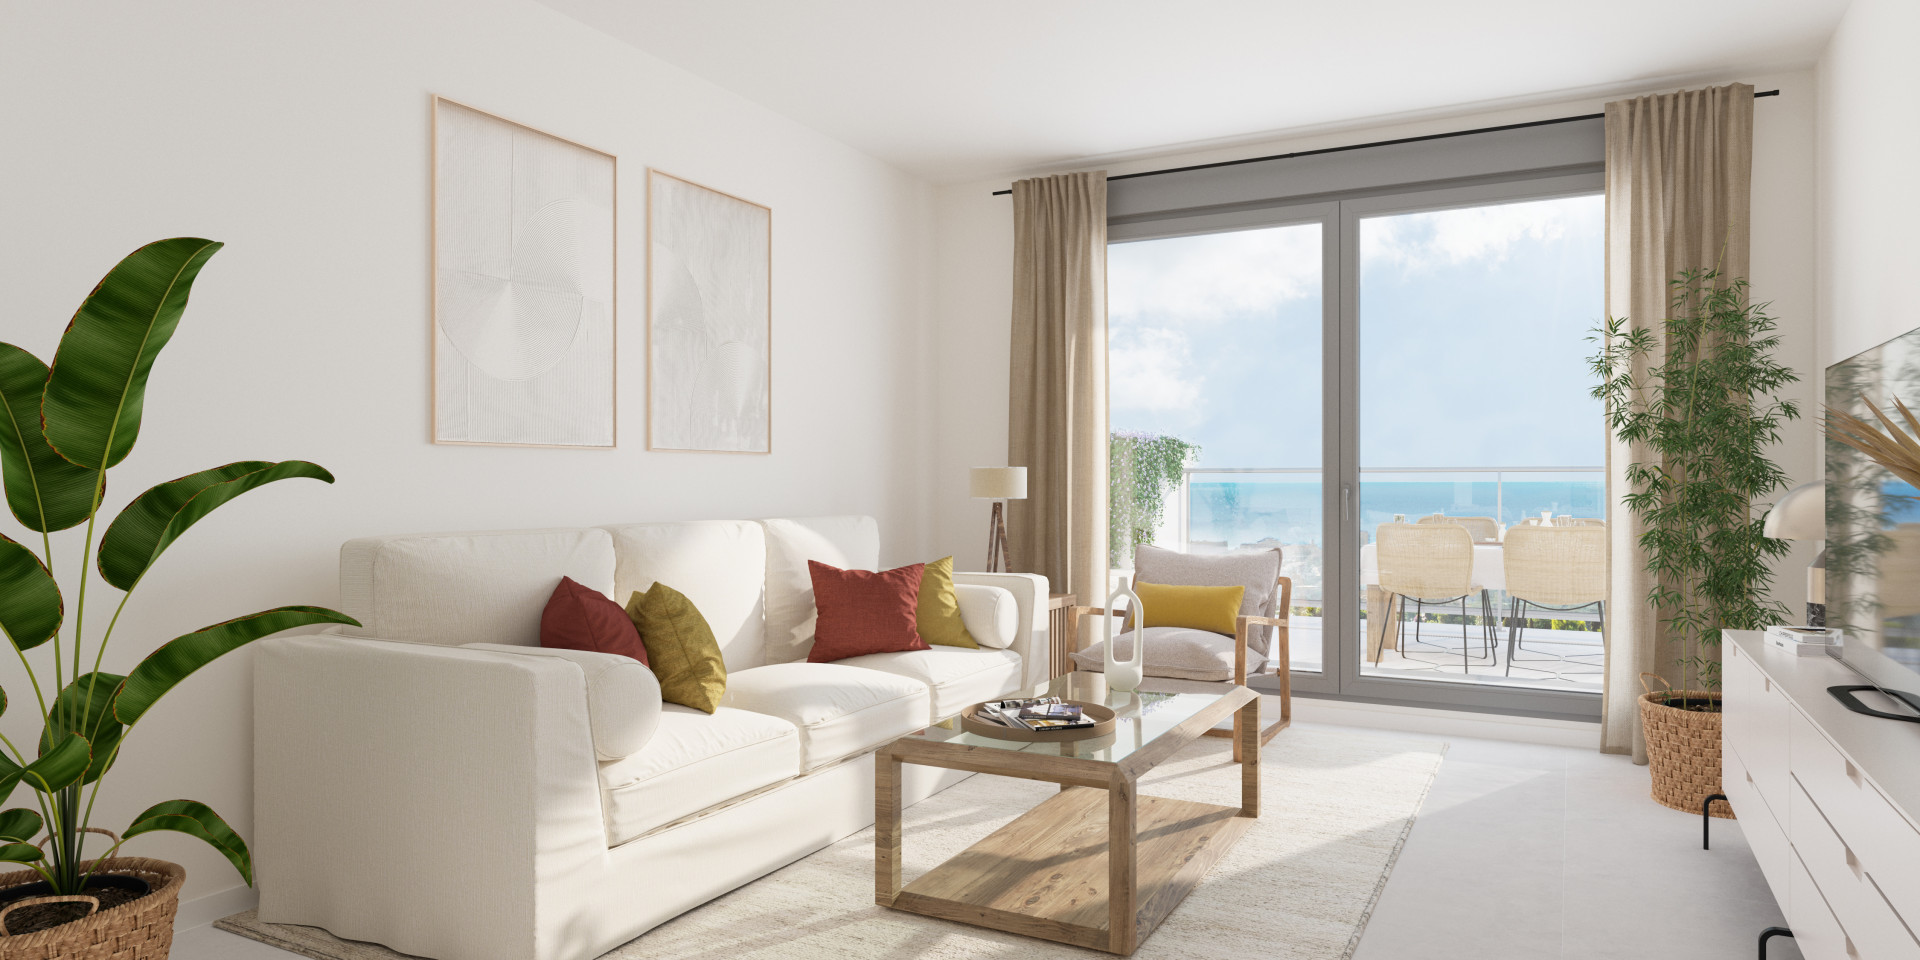 Modern three bedroom flat overlooking the Benalmadena coastline. | Image 3